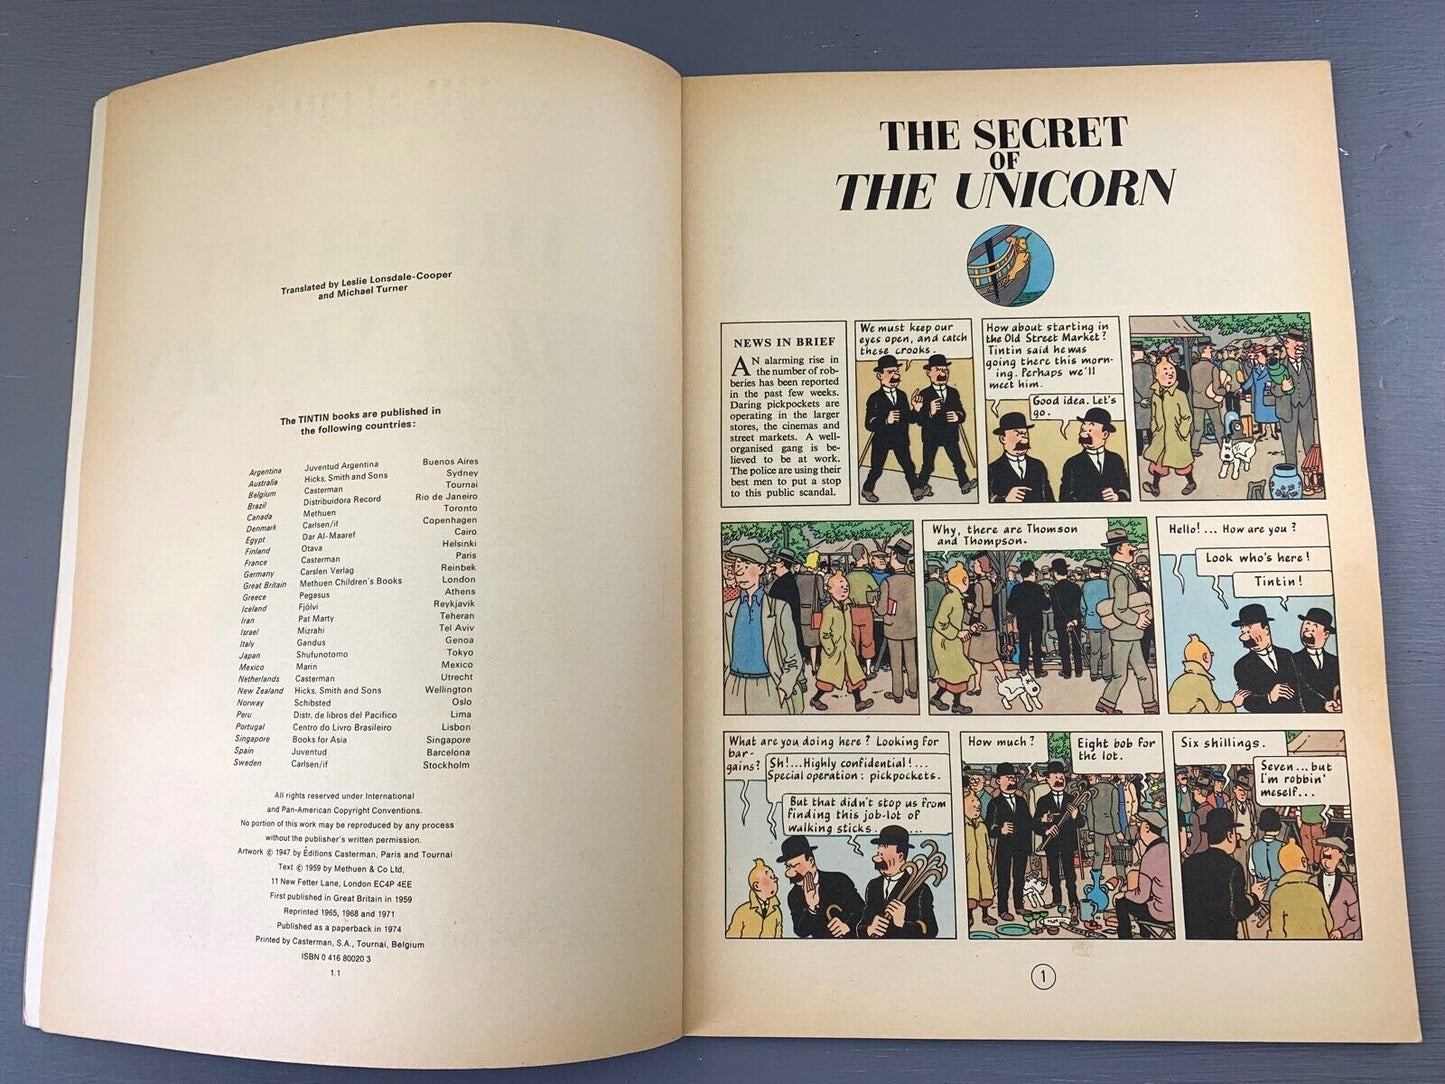 Secret of the Unicorn Methuen 1974 1st UK Paperback Edition Rare Tintin Book Herge